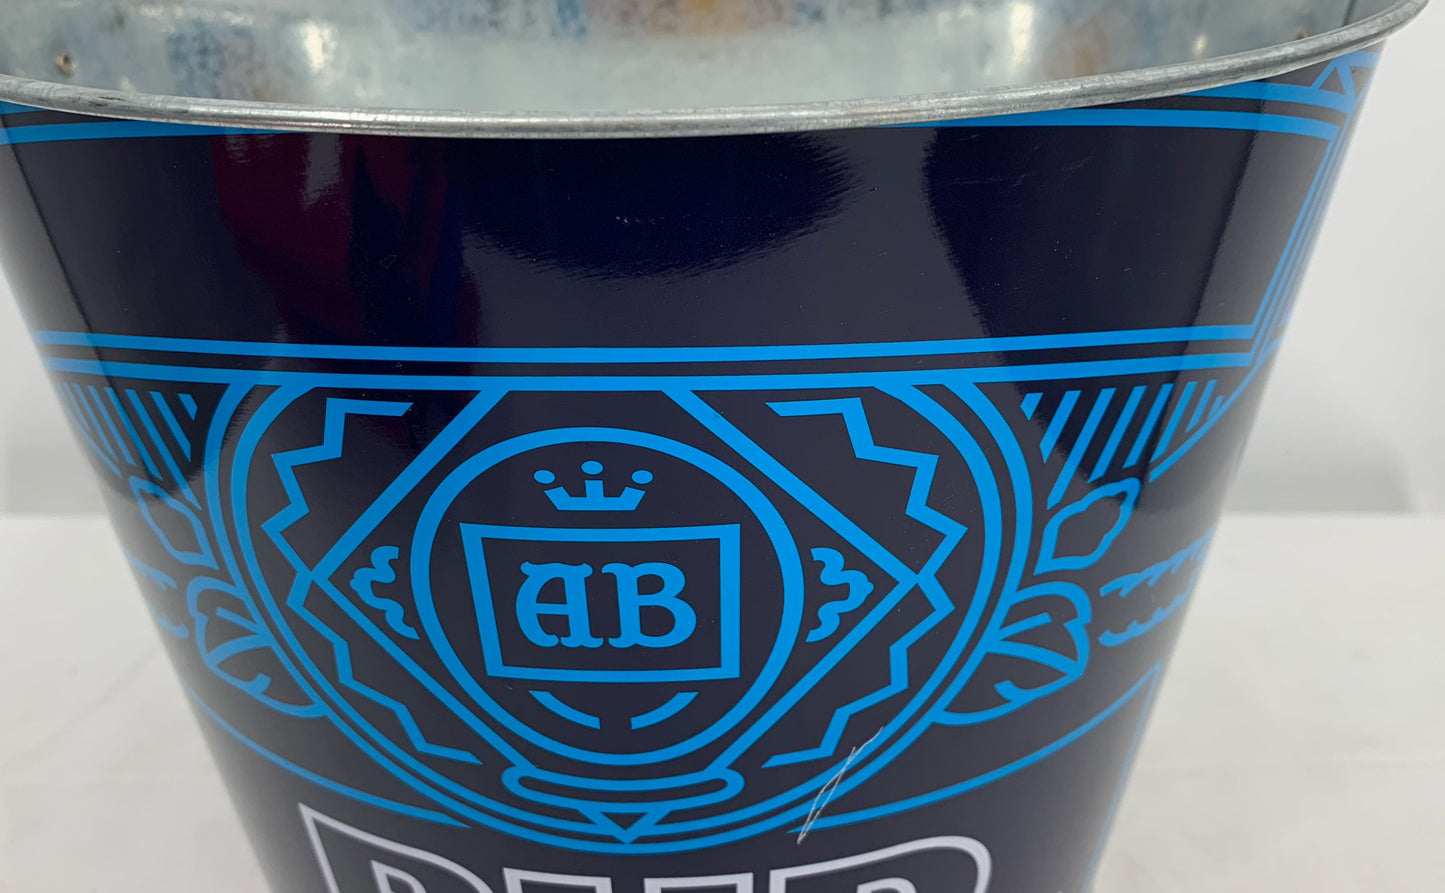 2018 Bud Light Logo Bar Ice Bucket For Man Cave With 6 Bud/Bud Light Coozies